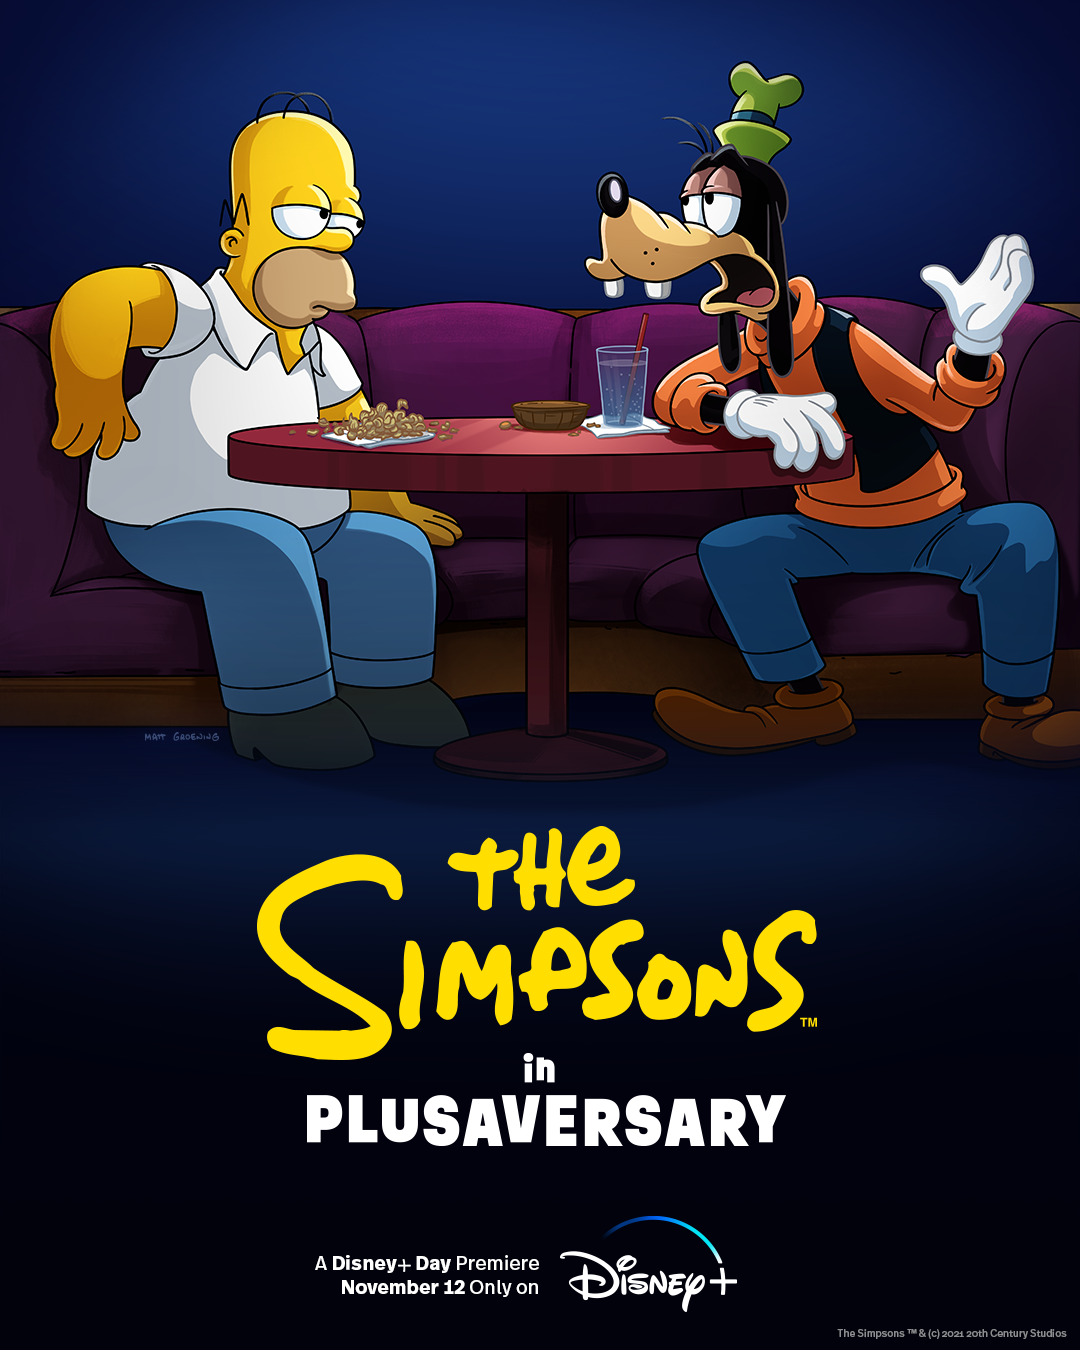 The Simpsons Disney+ Day Plusaversary